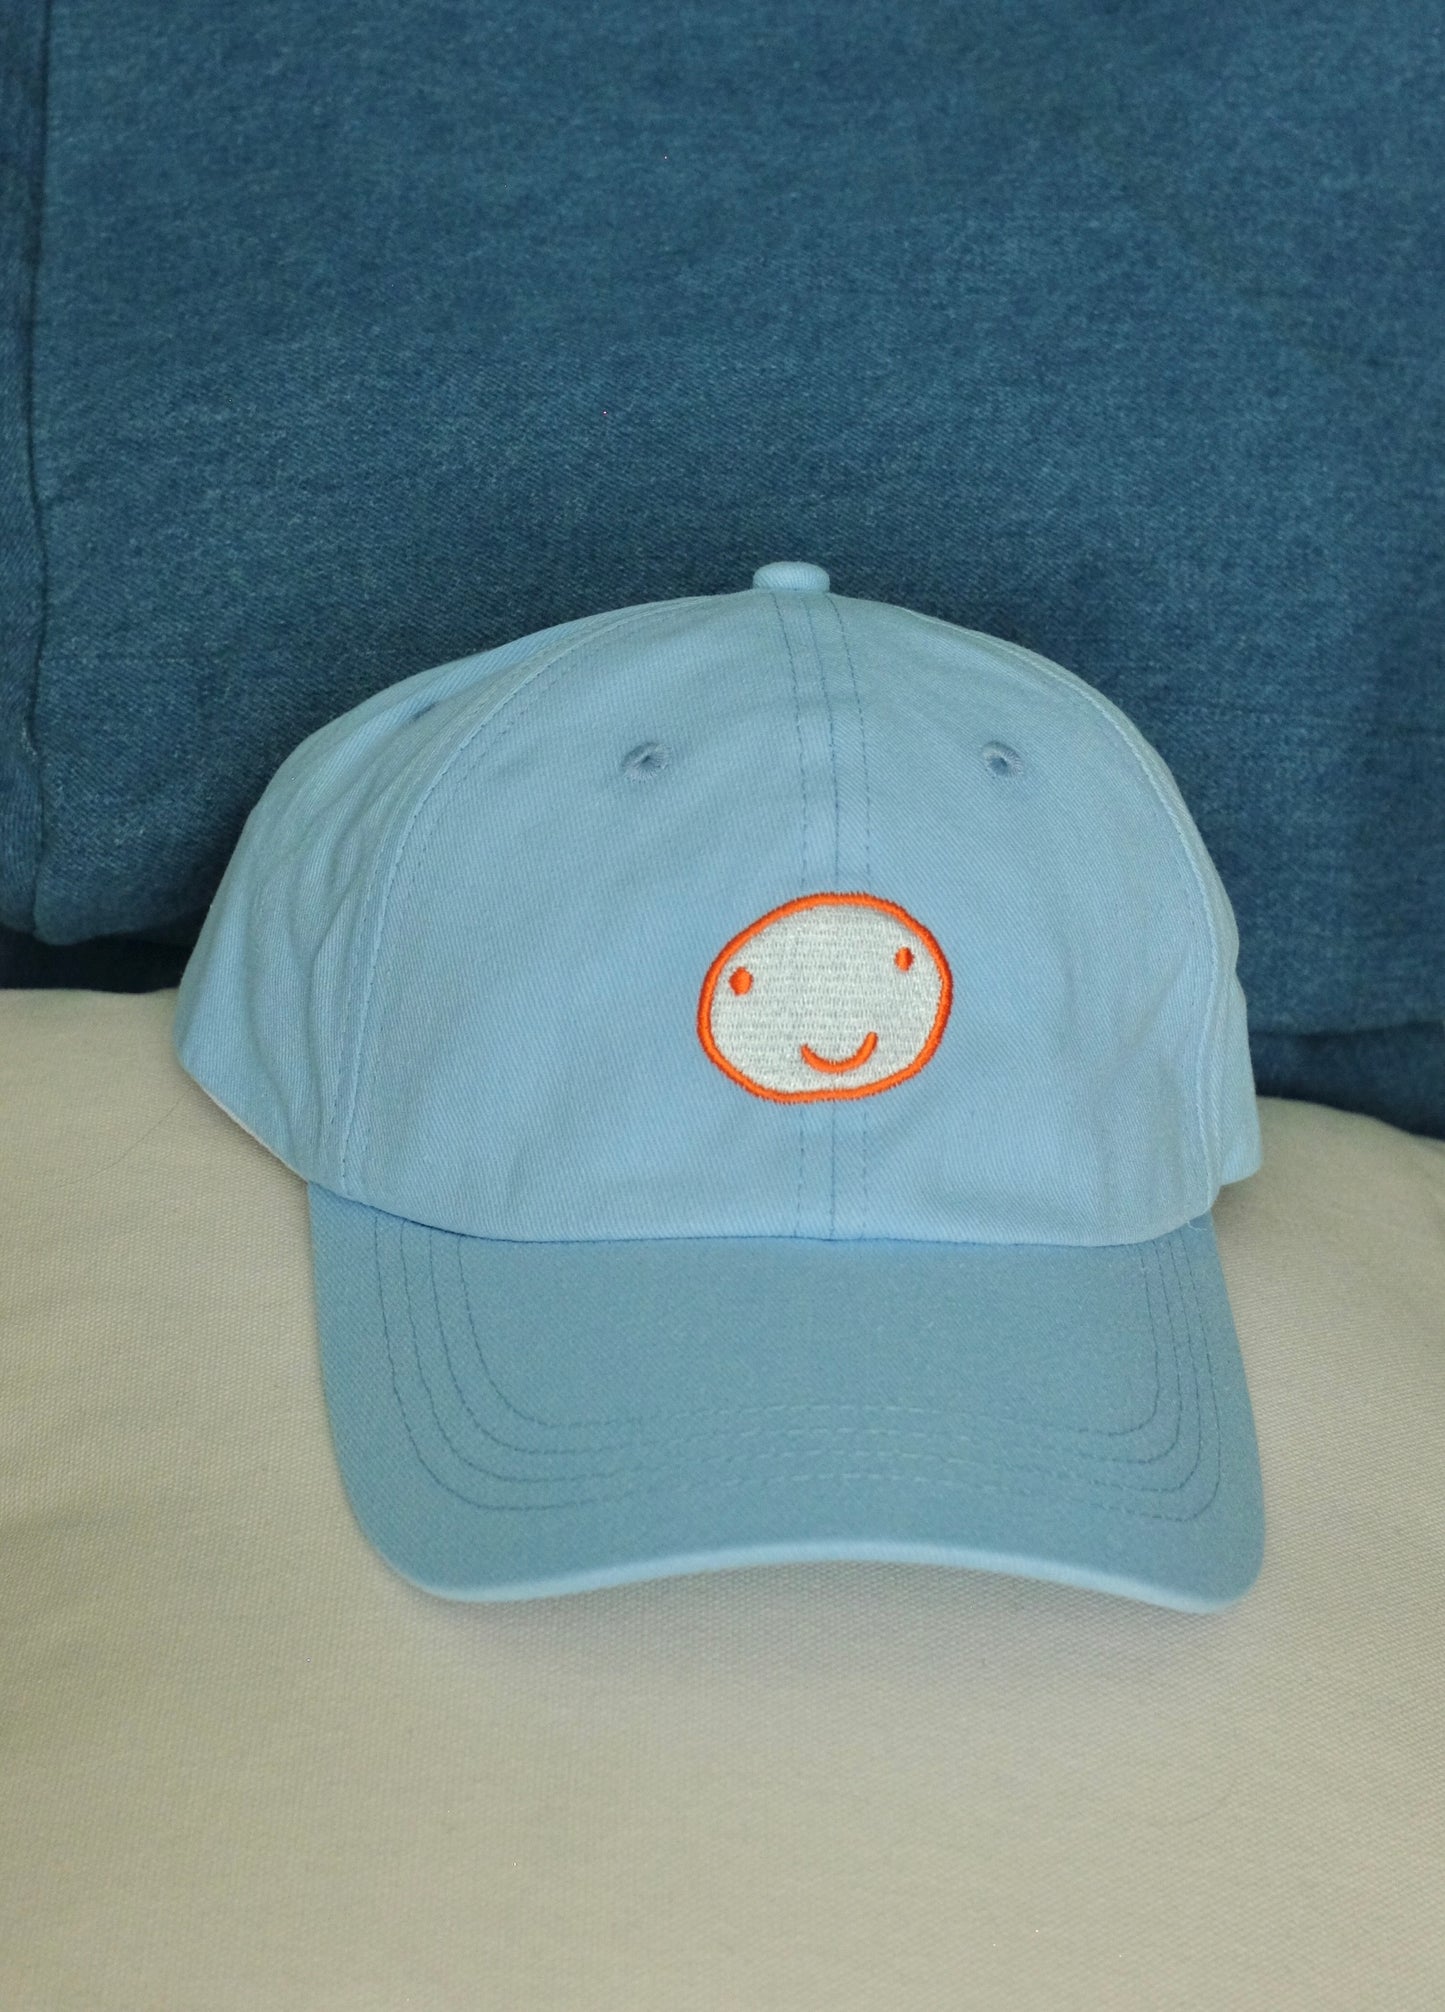 Happy Hat- The Dad Hat